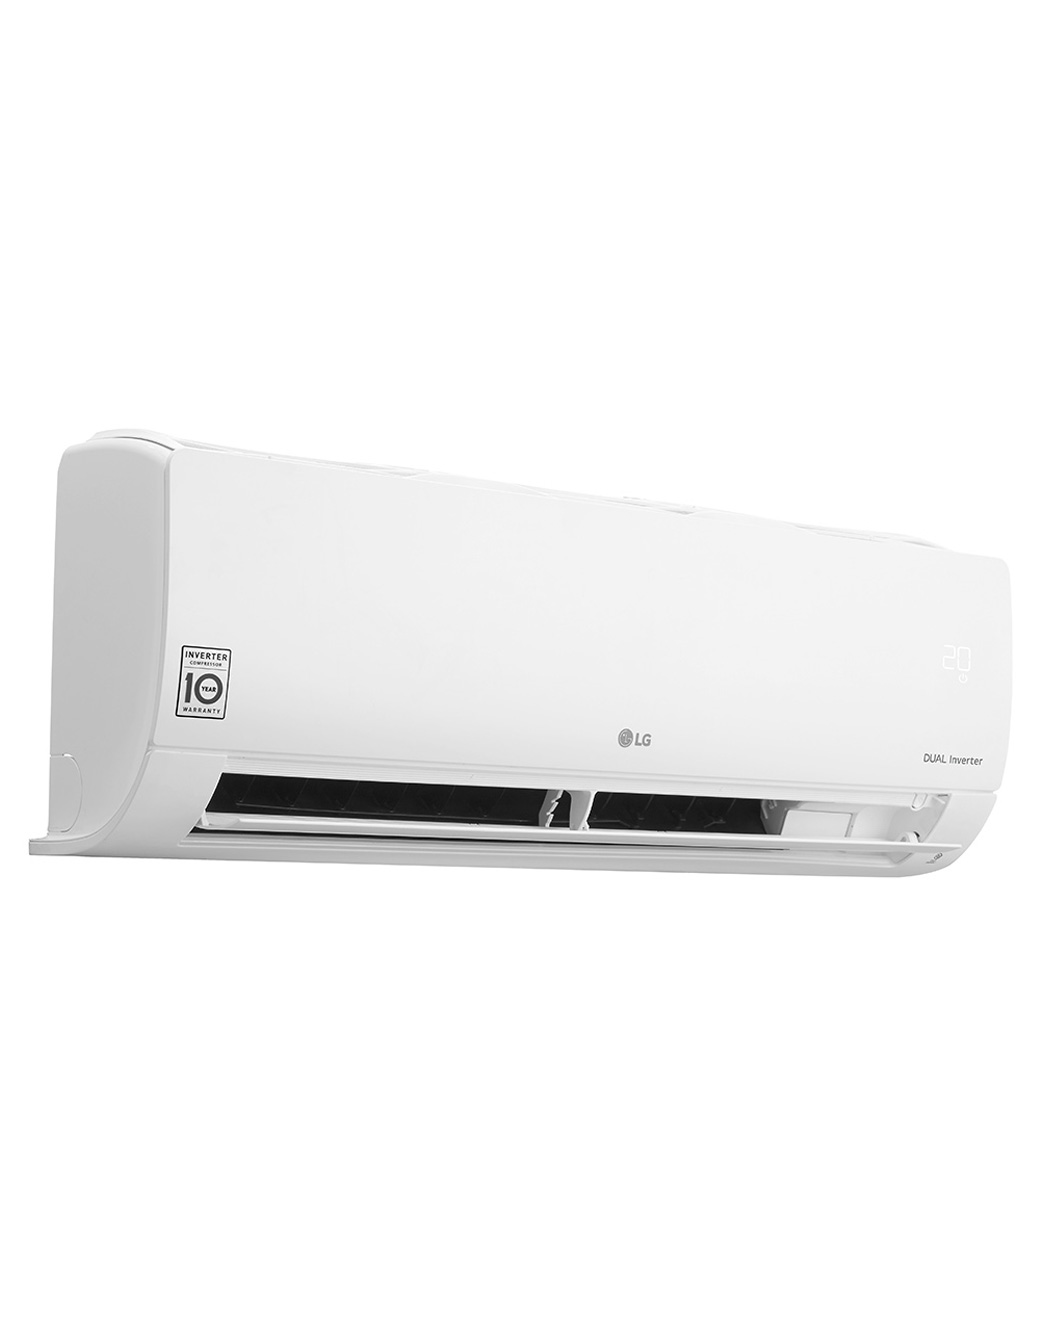 LG 18,000 BTU, Dualcool Single Split Inverter Air Conditioner (R410a) LG Bangladesh